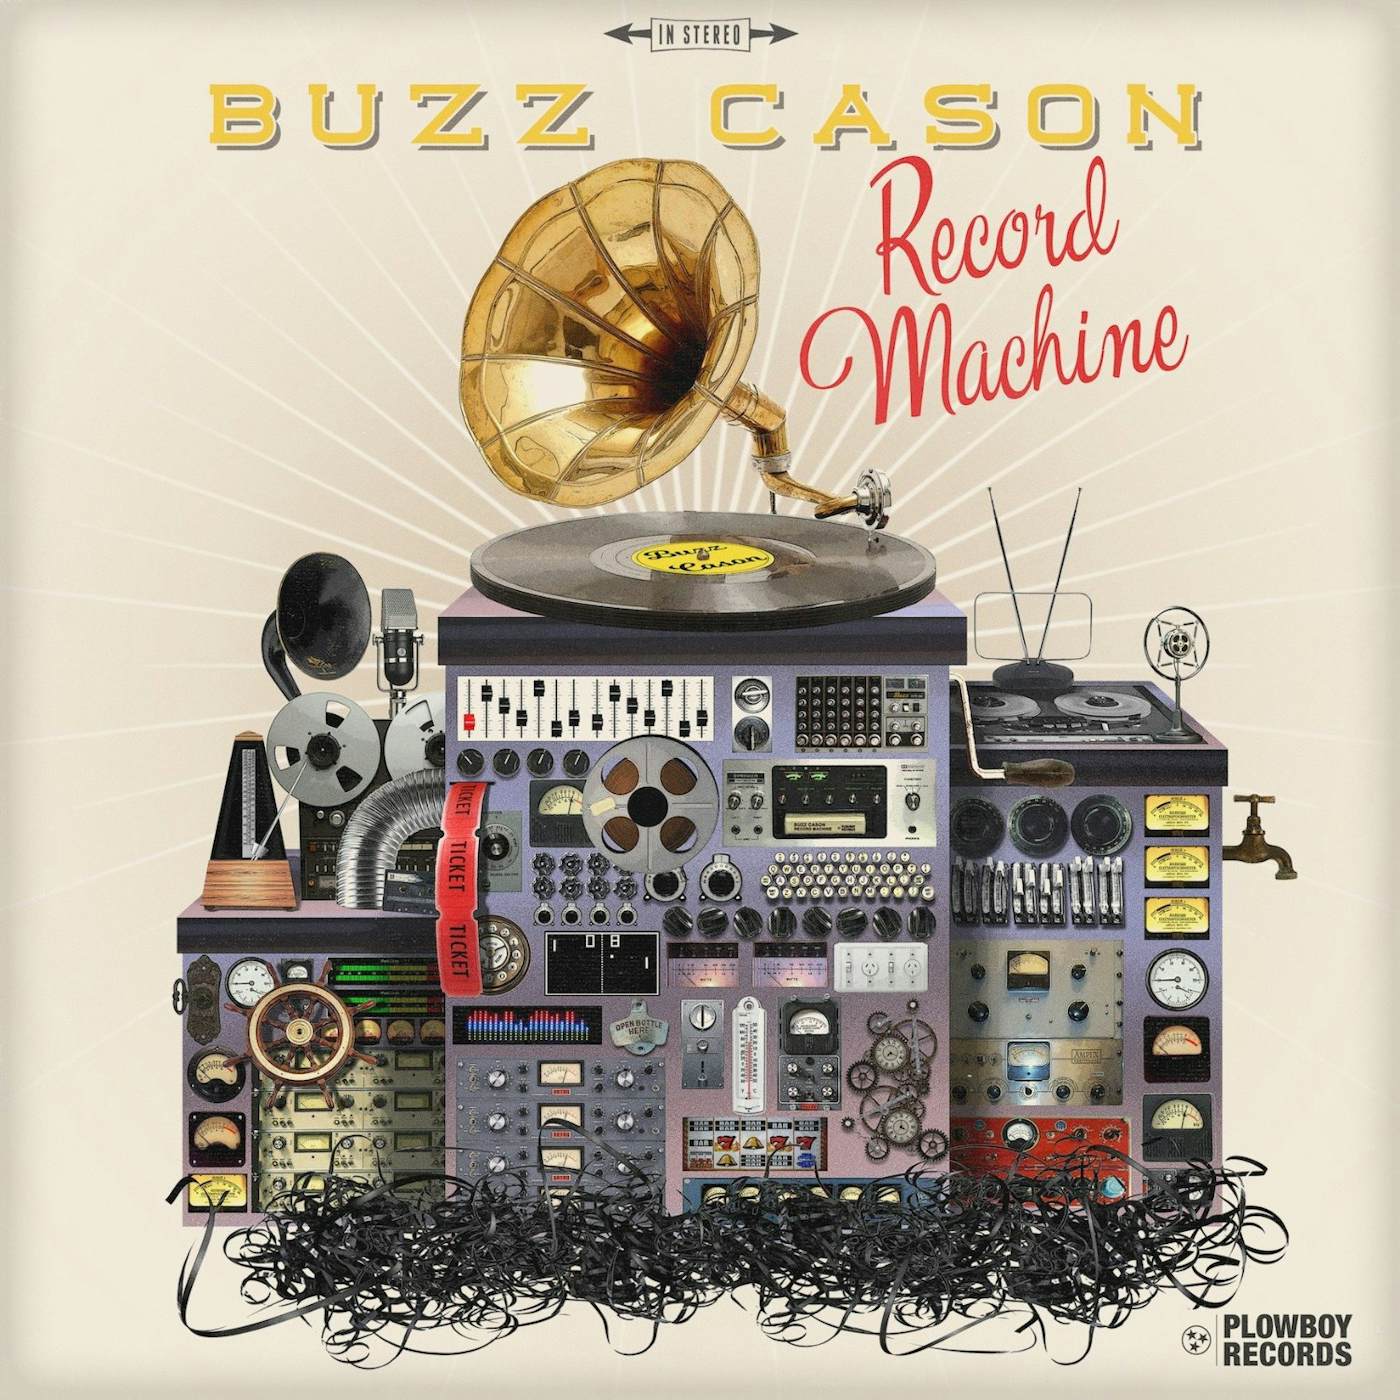 Buzz Cason RECORD MACHINE CD